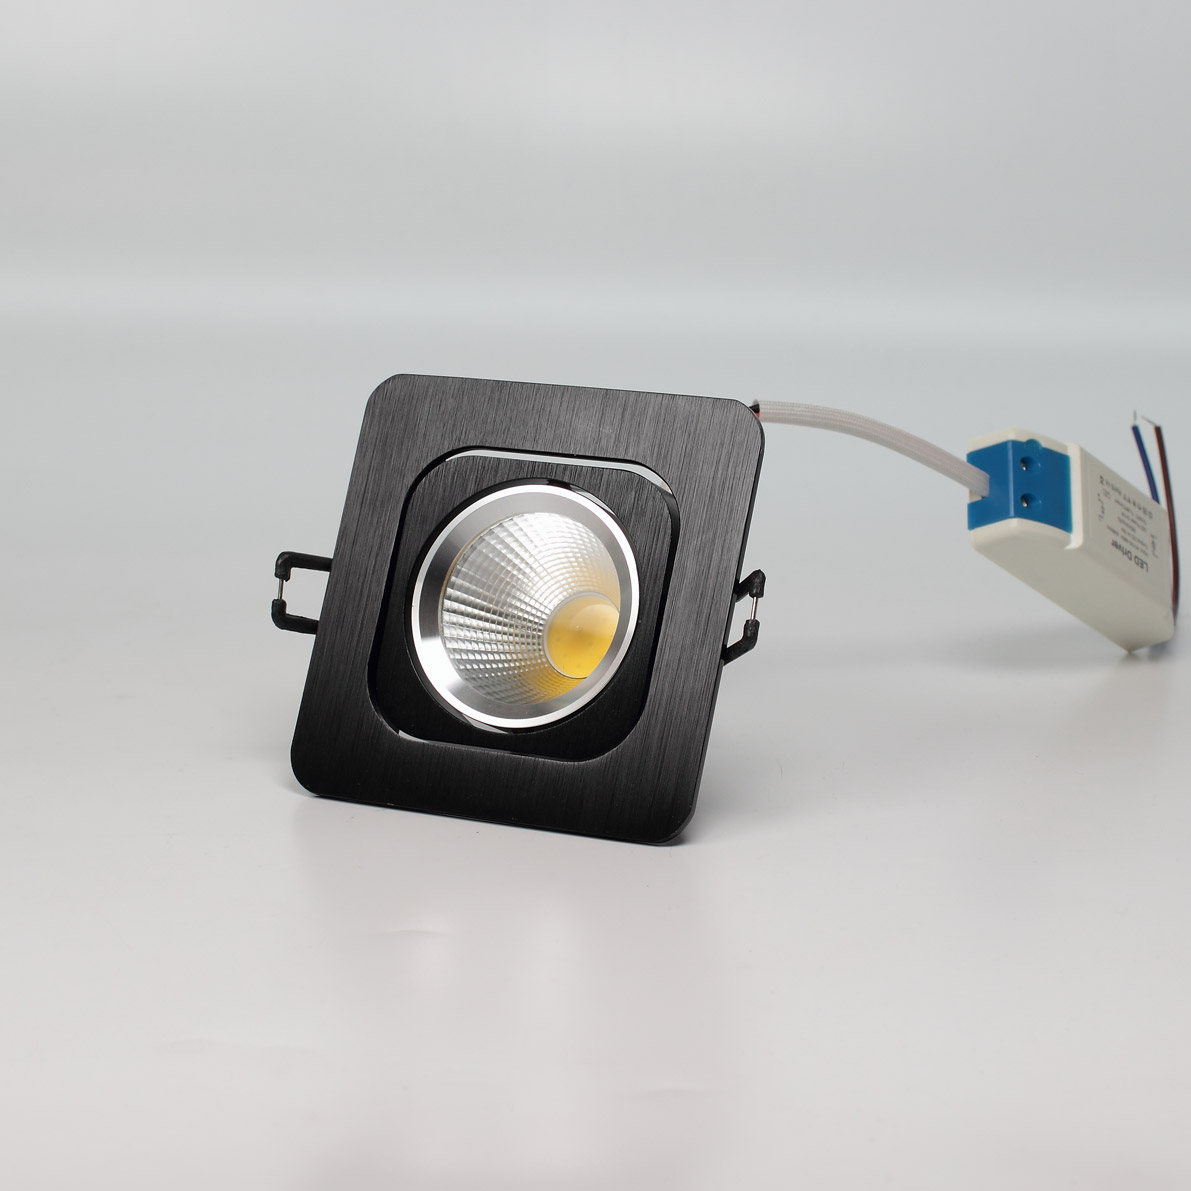 Светодиодные светильники Светодиодный светильник встраиваемый 98-1 head Nest Series Black Square BW9 (5W,Day White)